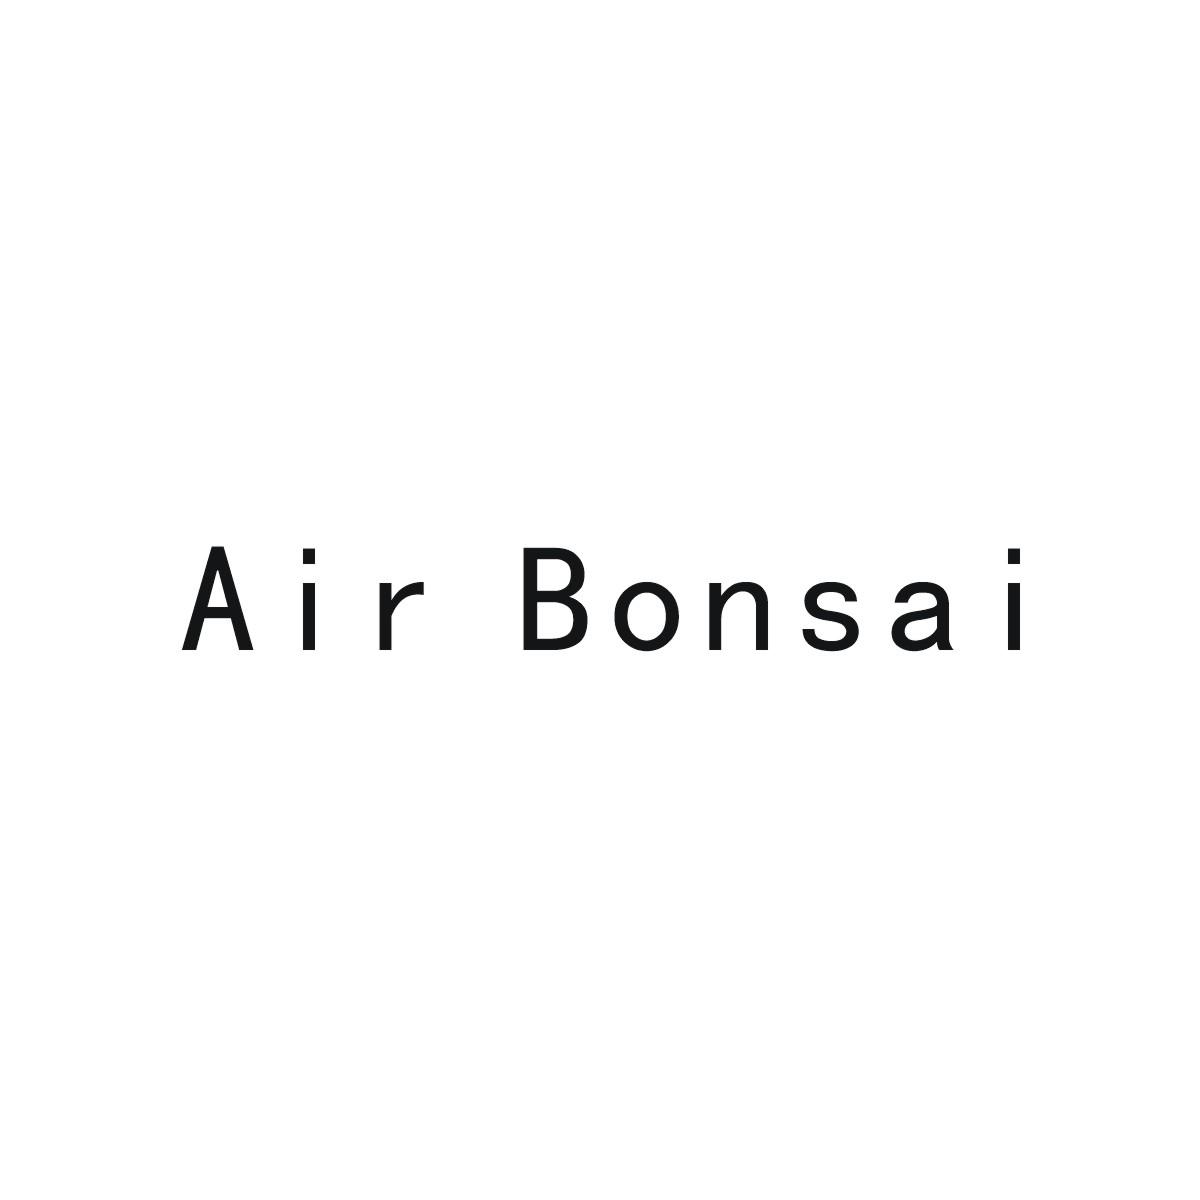 Air Bonsai美容柜商标转让费用买卖交易流程